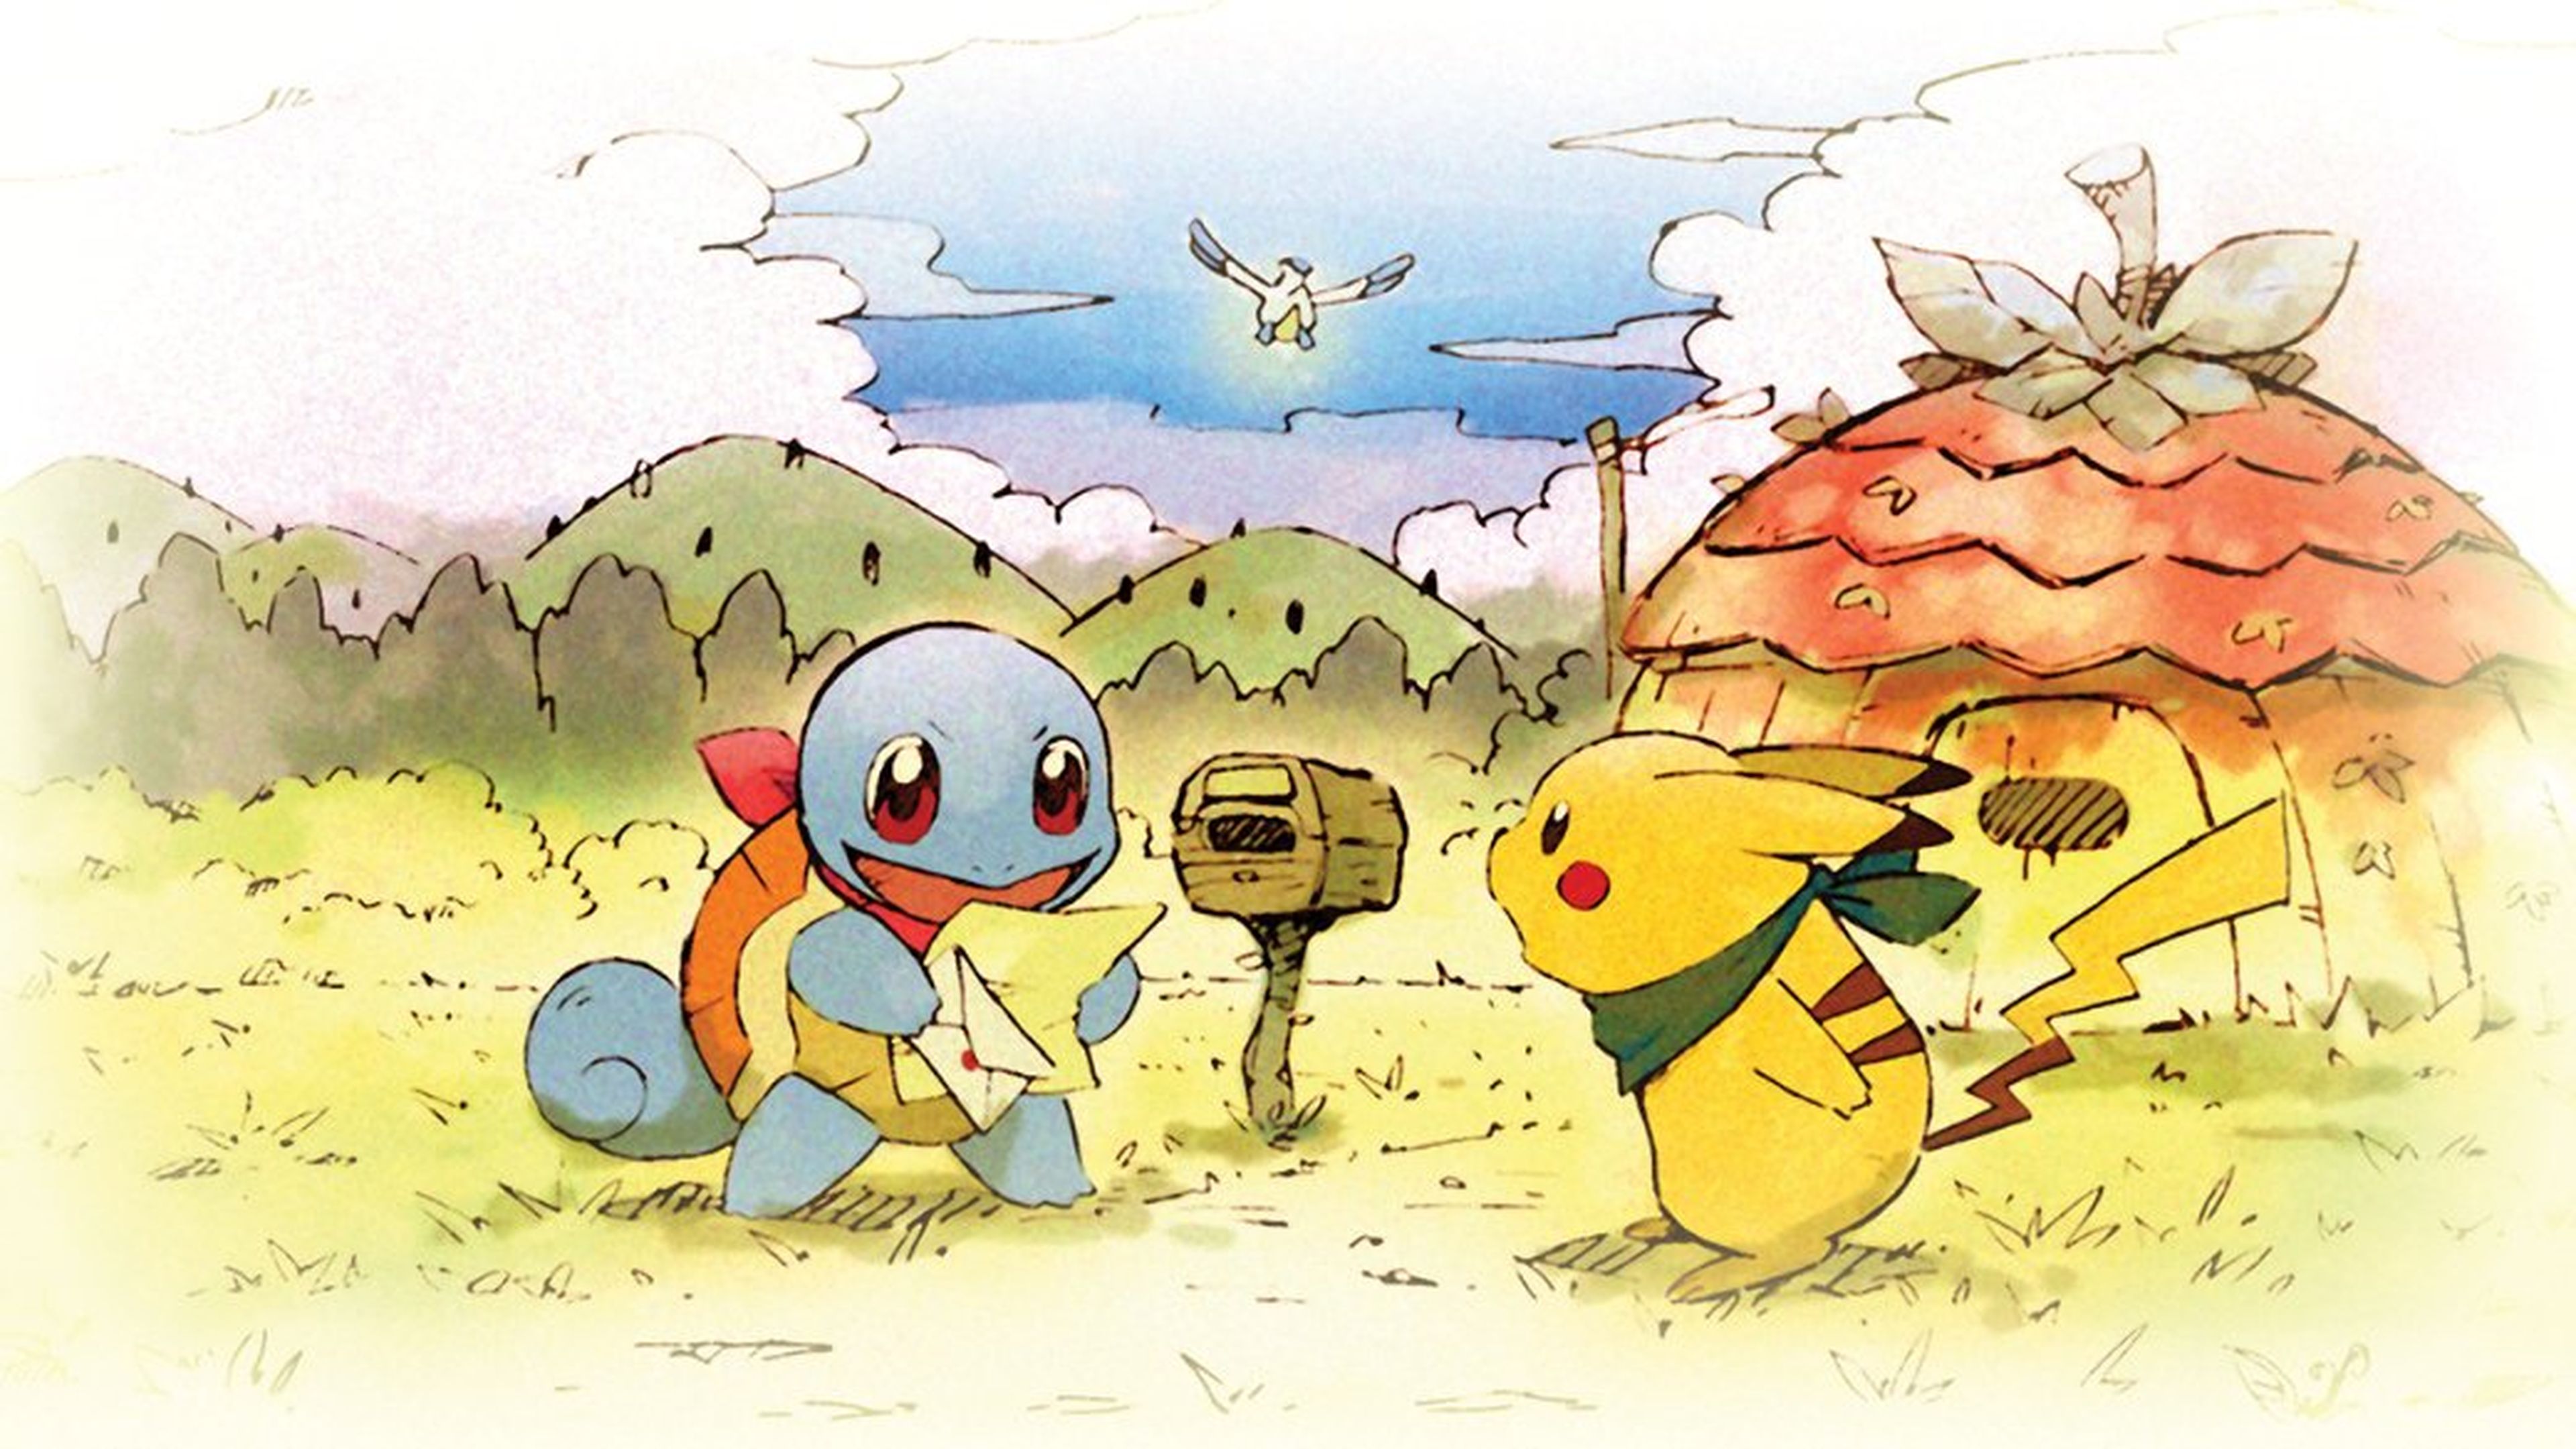 Análisis Pokémon Mundo Misterioso: Equipo de Rescate DX (Nintendo Switch)